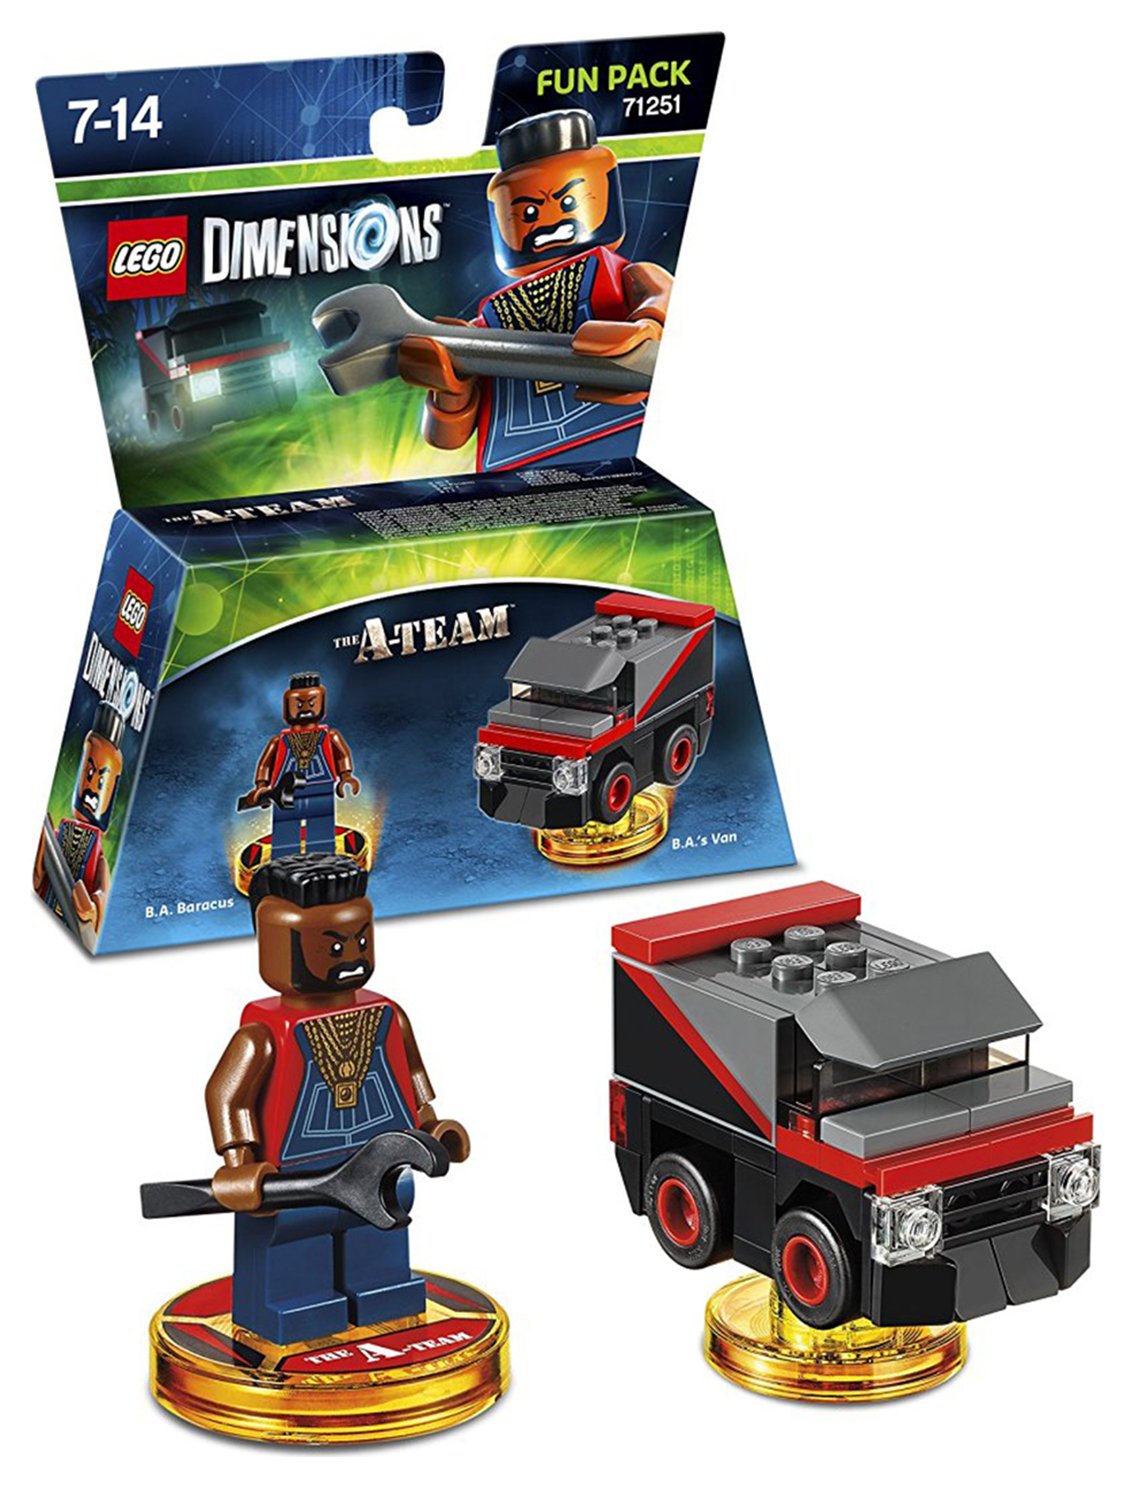 LEGO Dimensions The A Team Fun Pack